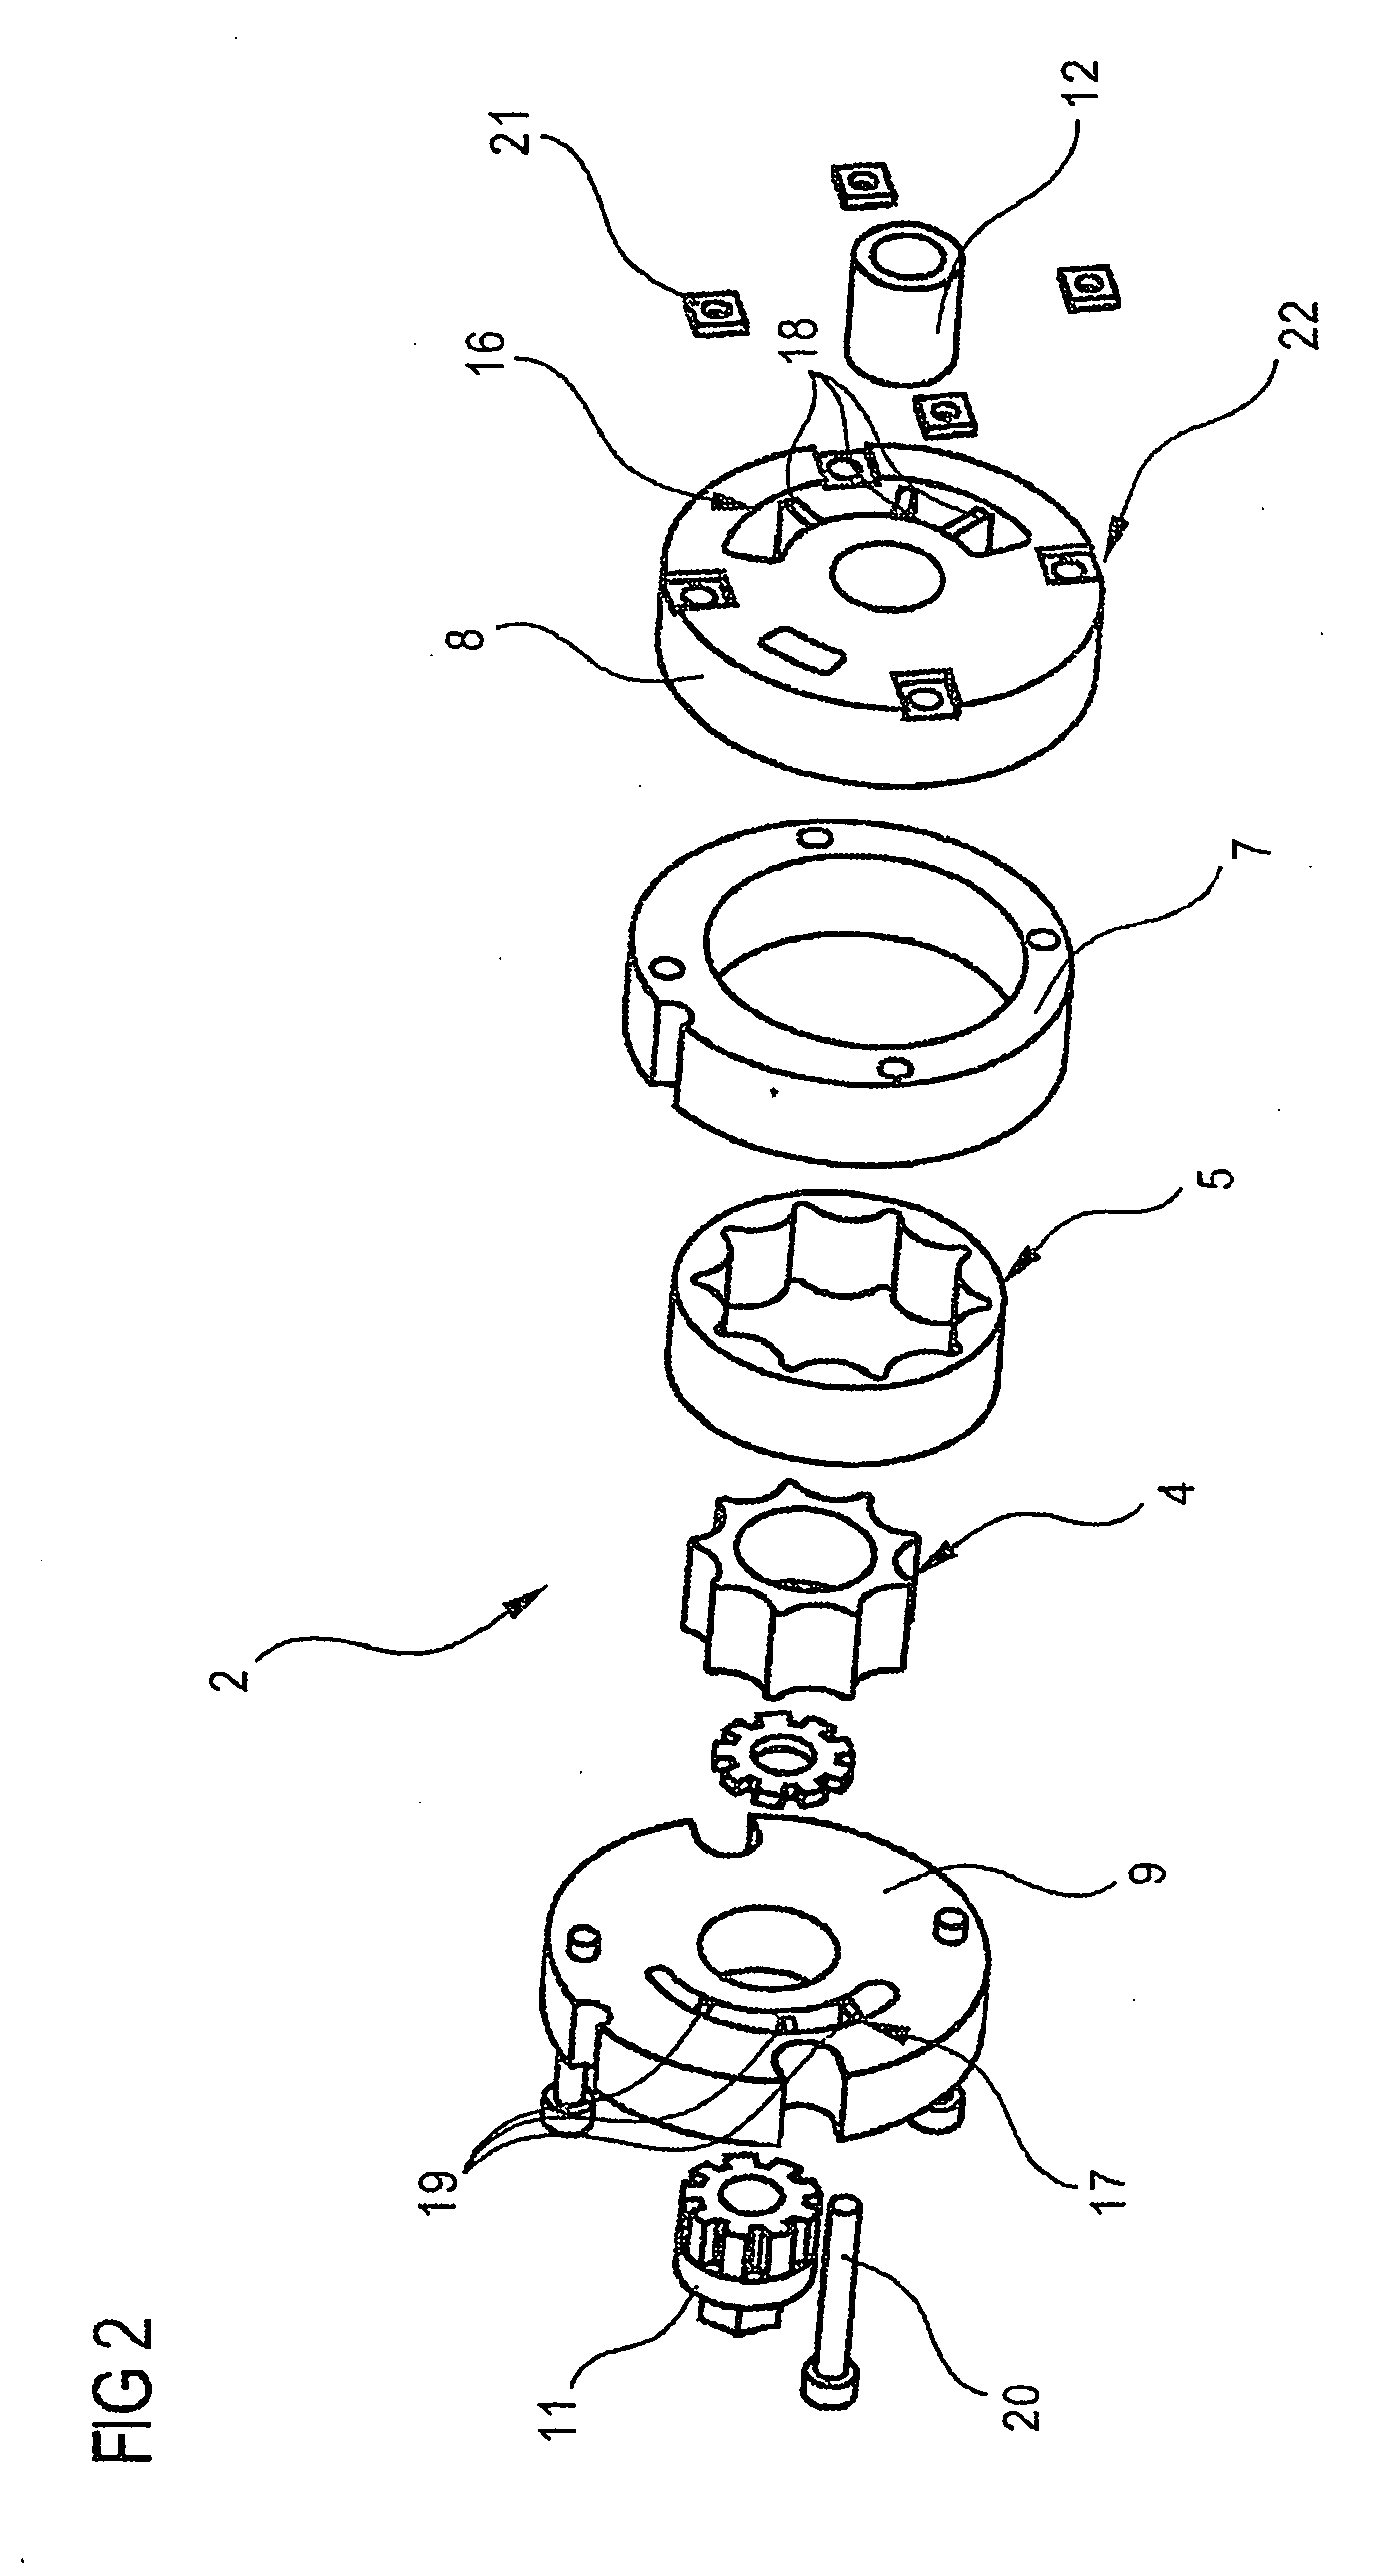 Internal gear-wheel pump comprising reinforced channels